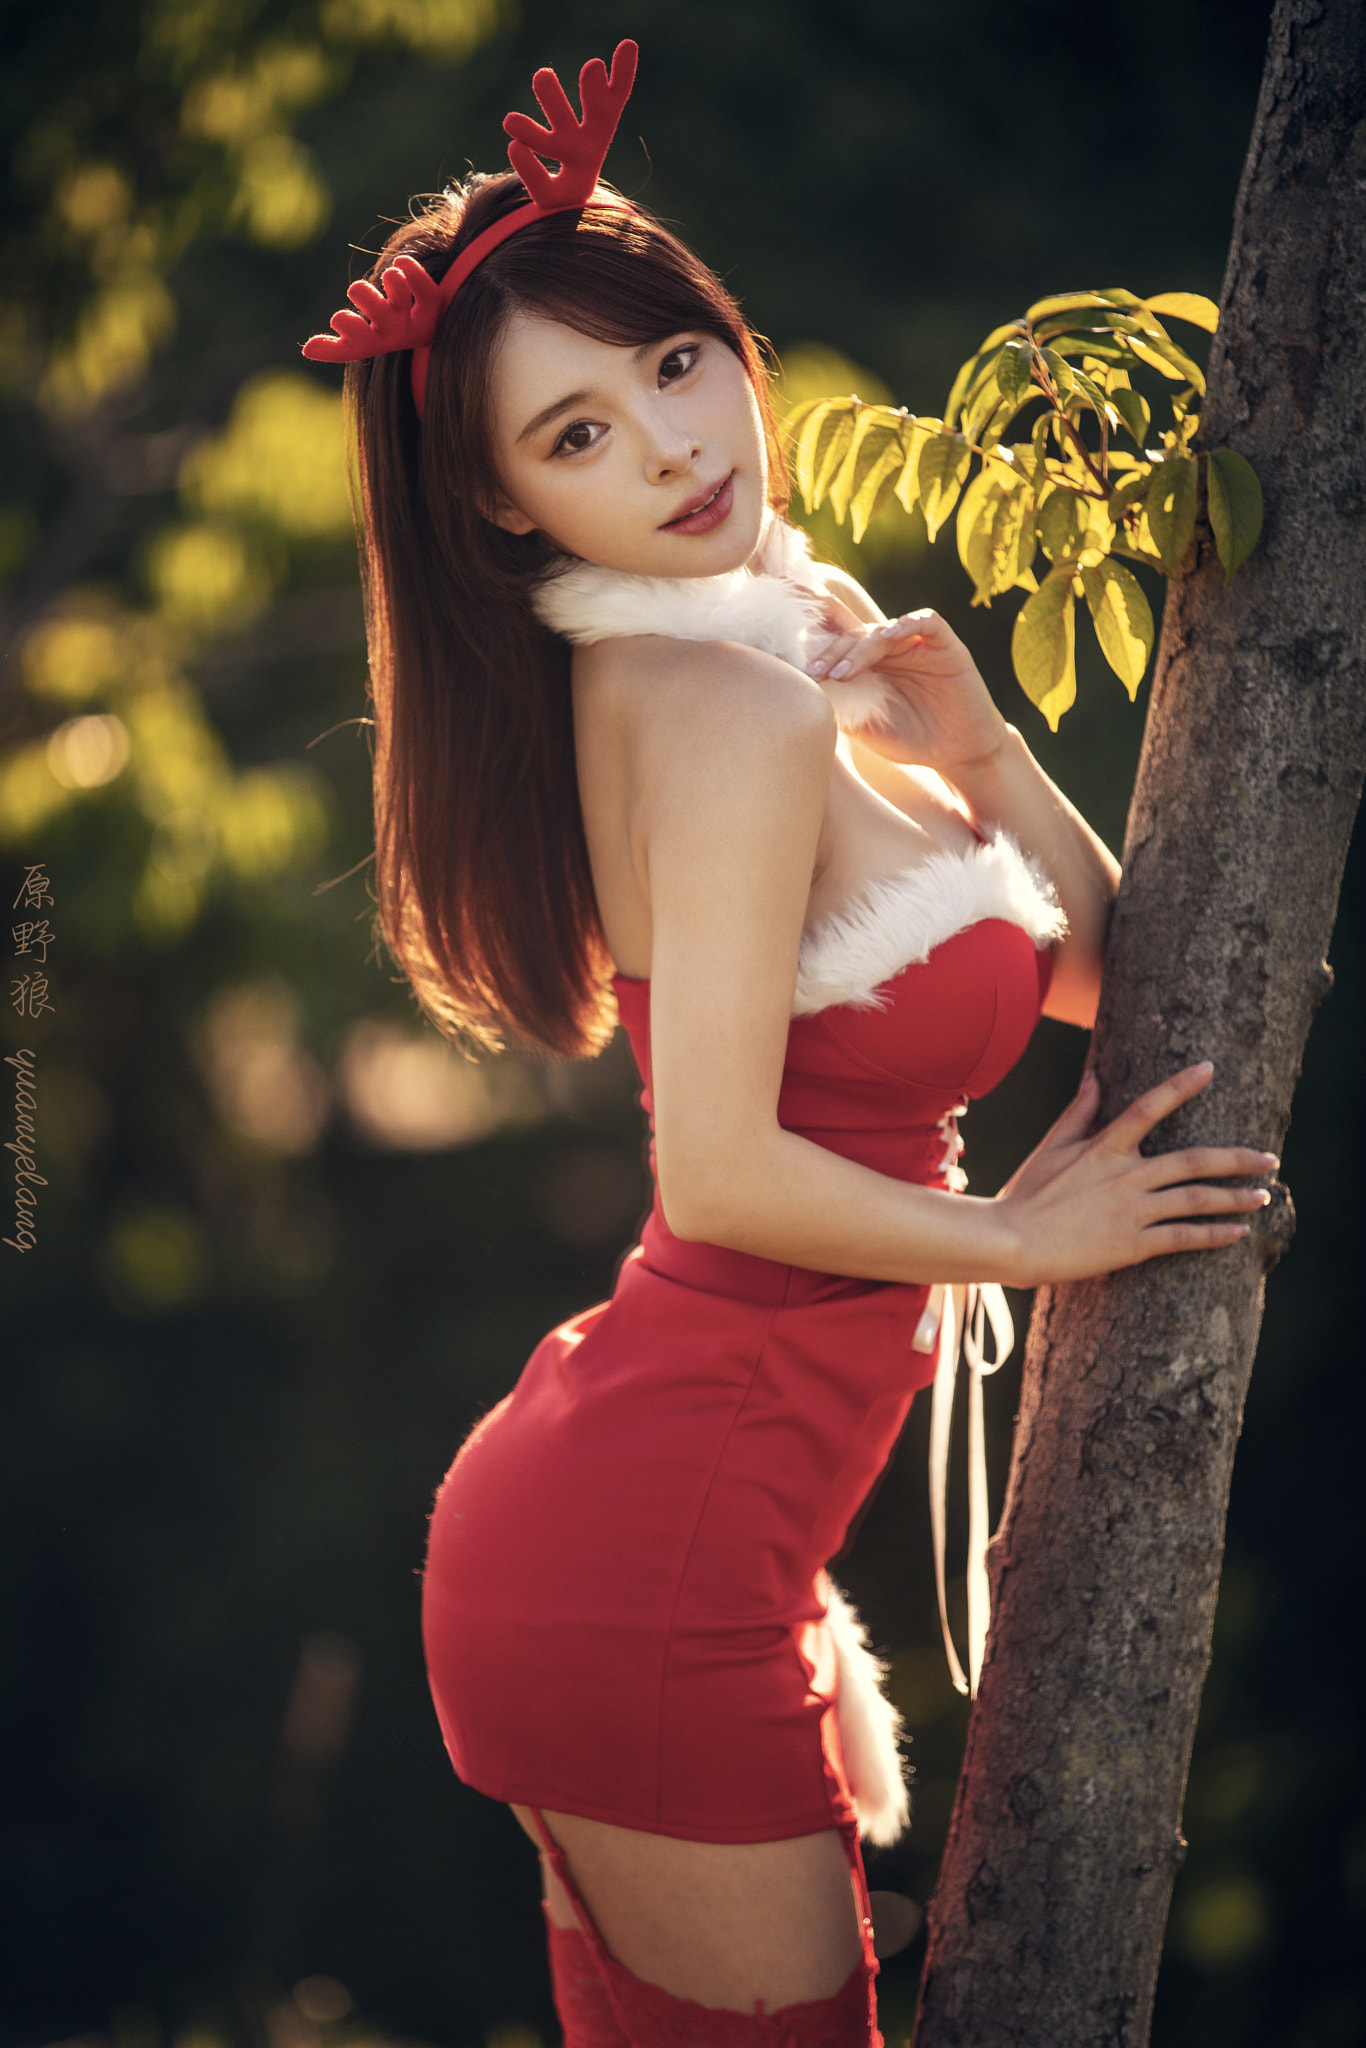 Yuan Yelang Women Asian Hair Accessories Santa Girl Red Clothing Dress Trees Leaves Christmas Clothe 1366x2048